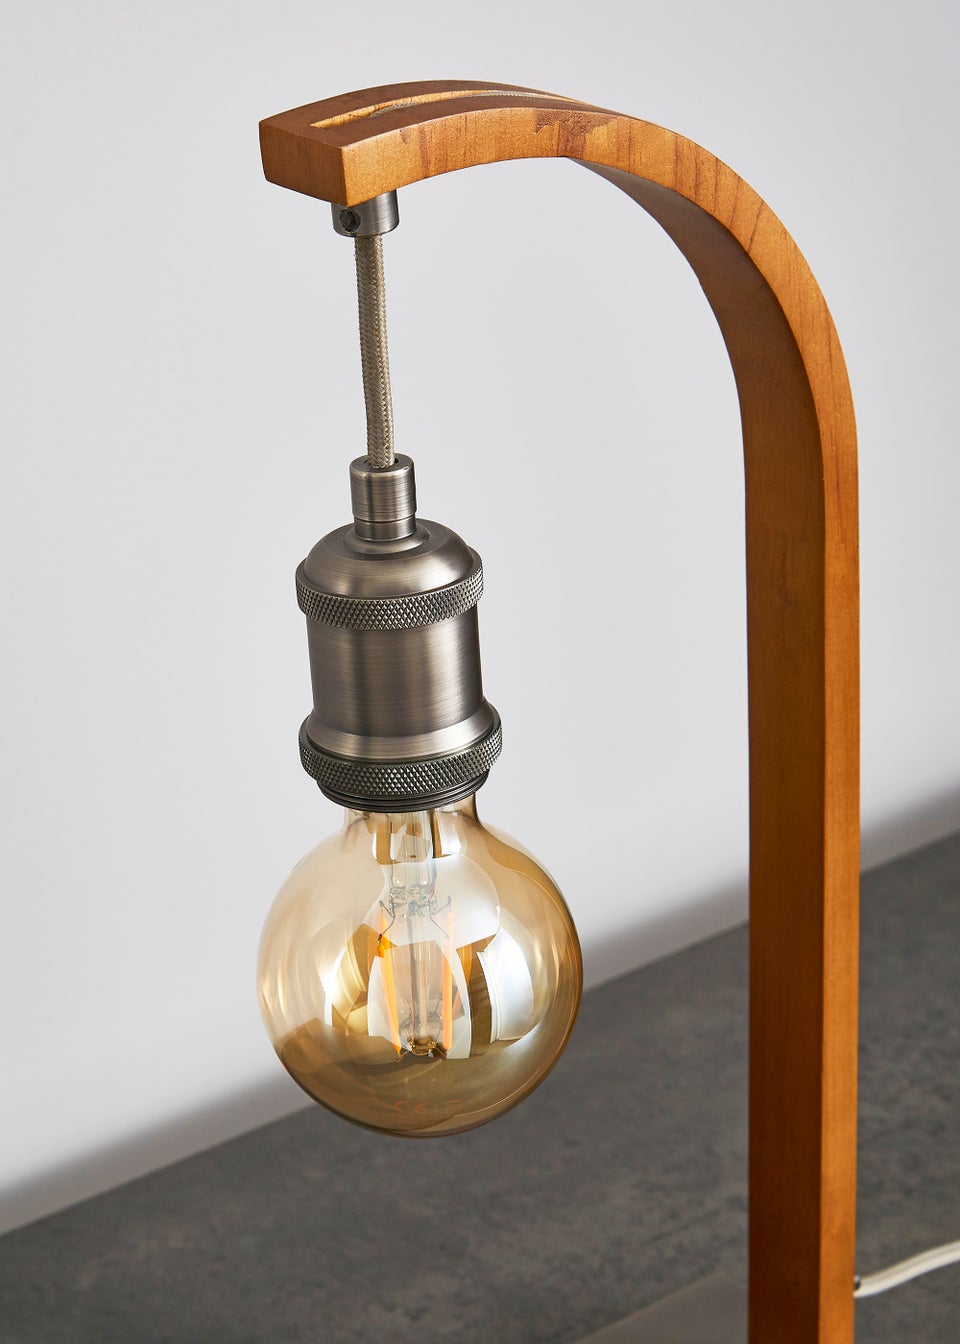 Inlight Hanging Bulb Table Lamp (45cm x 16cm x 12cm)